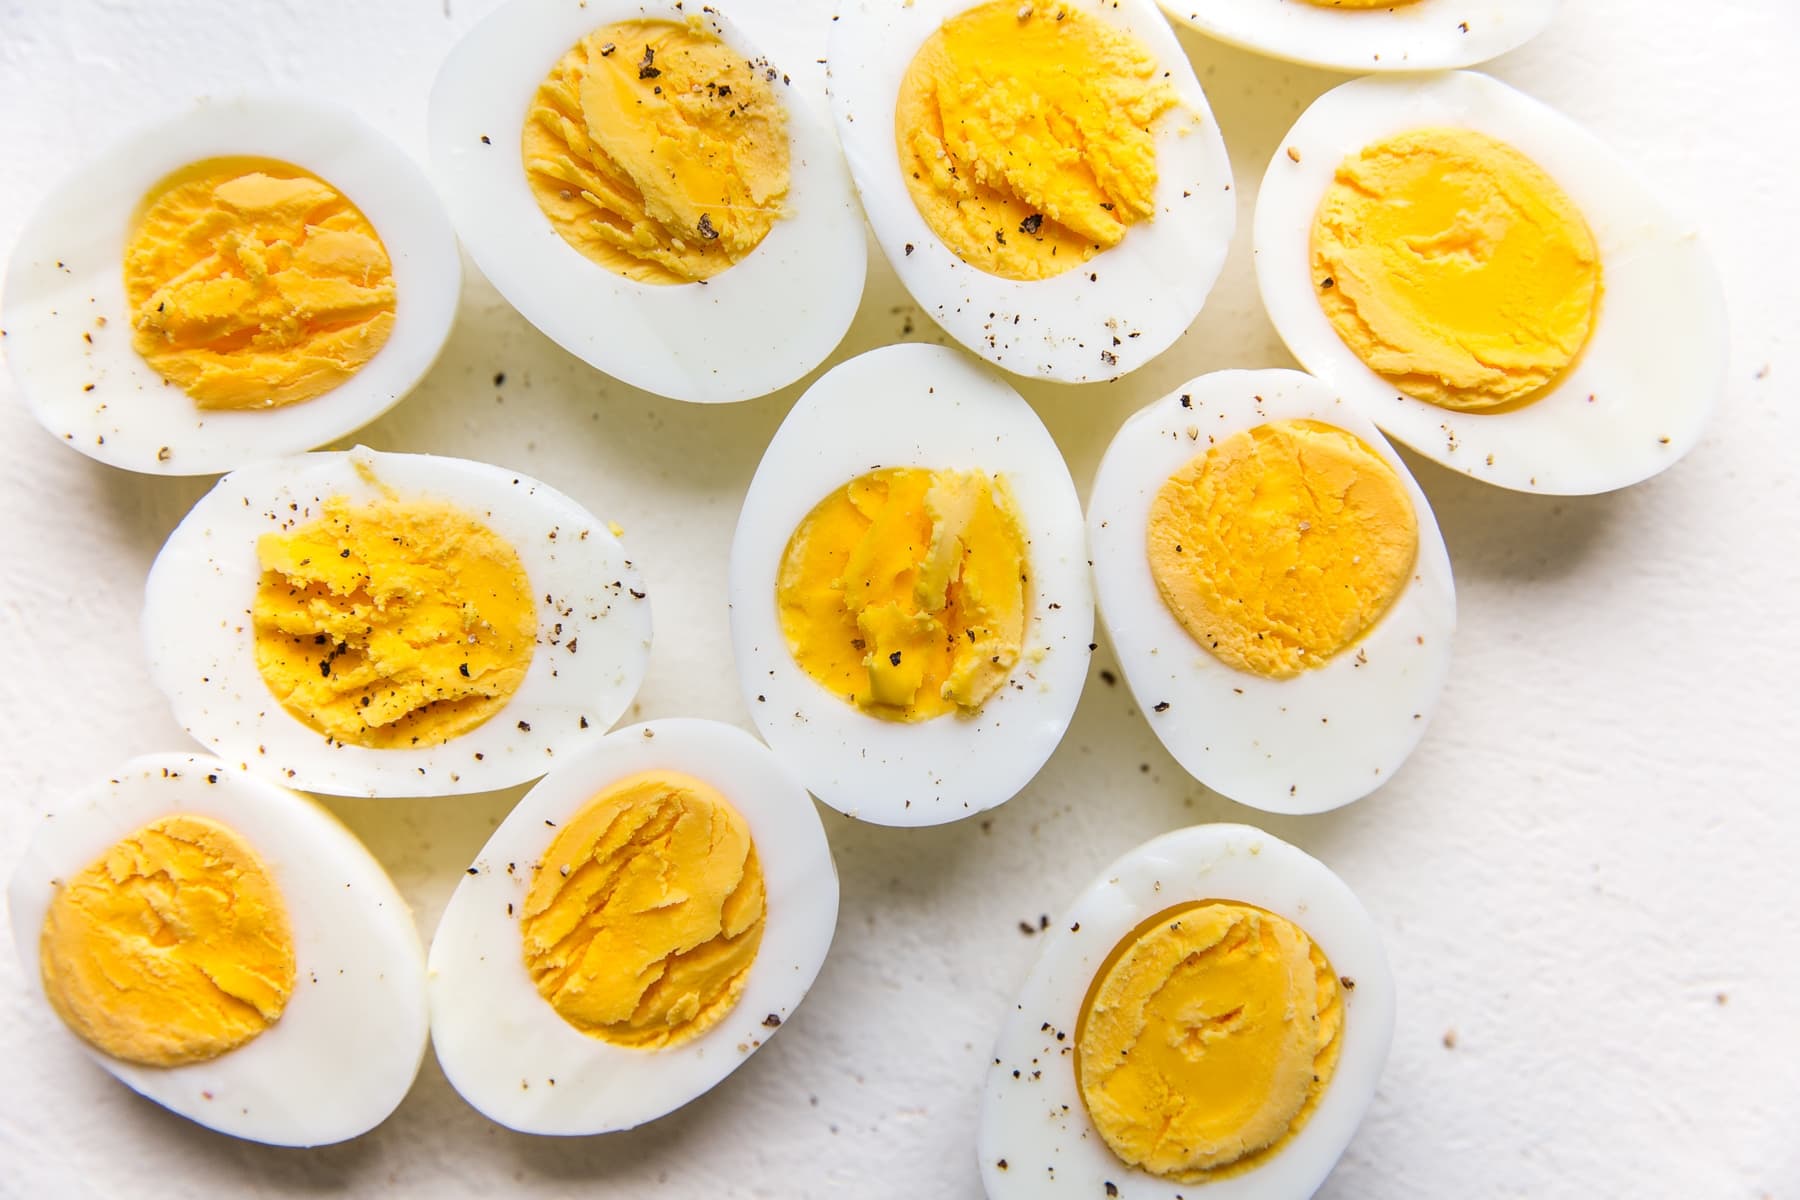 How to Make Hard-Boiled Eggs | The Modern Proper